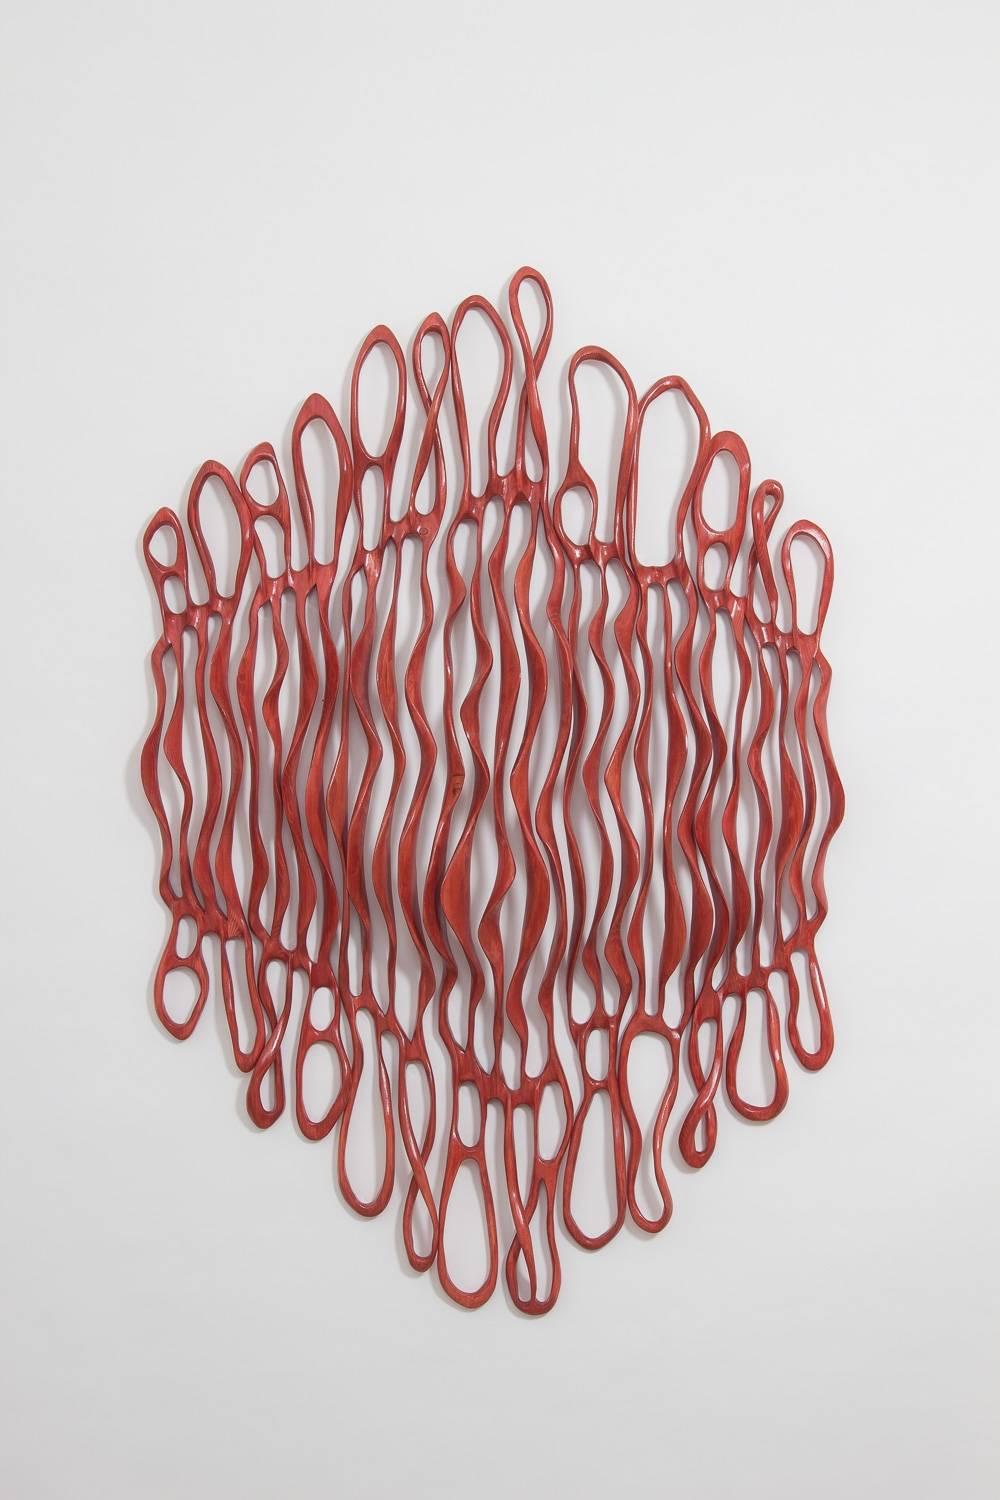 Caprice Pierucci Abstract Sculpture - Red Dawn Cascade